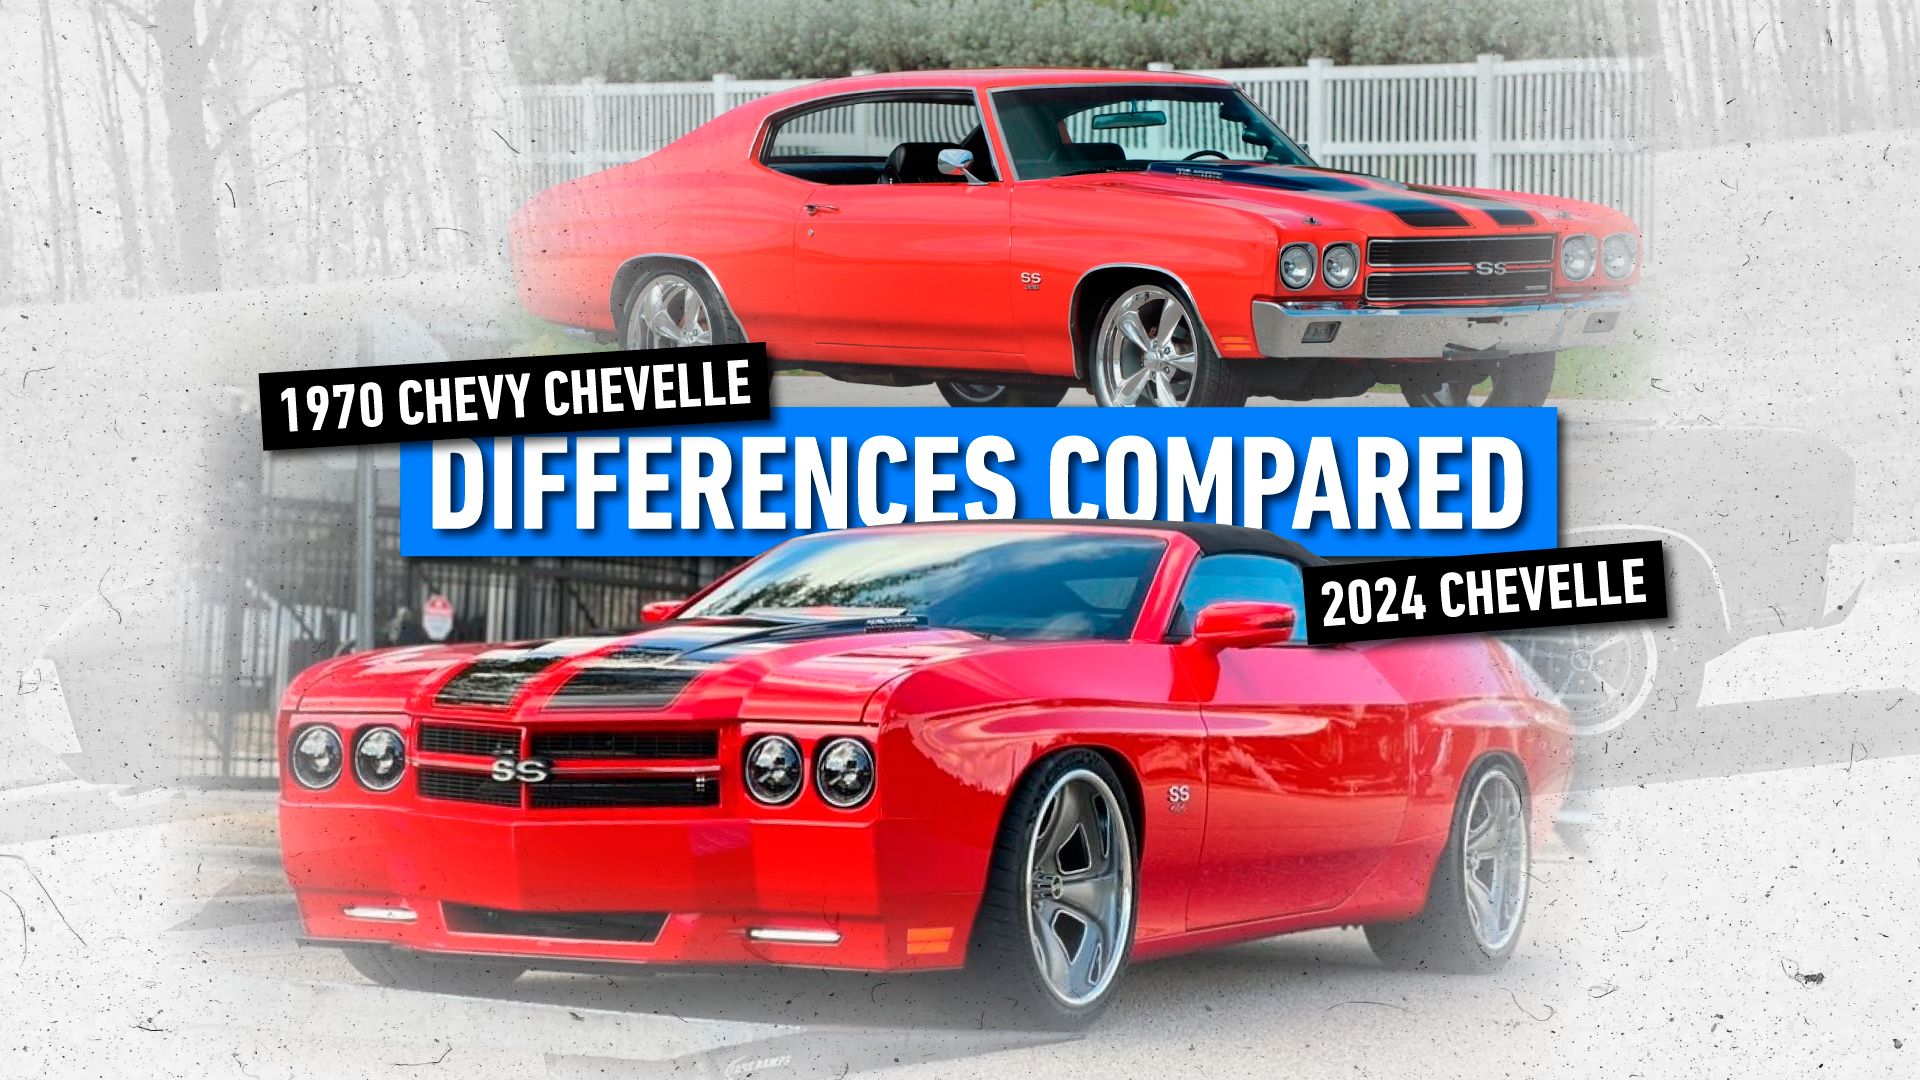 1970 Chevy Chevelle Vs 2024 Chevelle Differences Compared